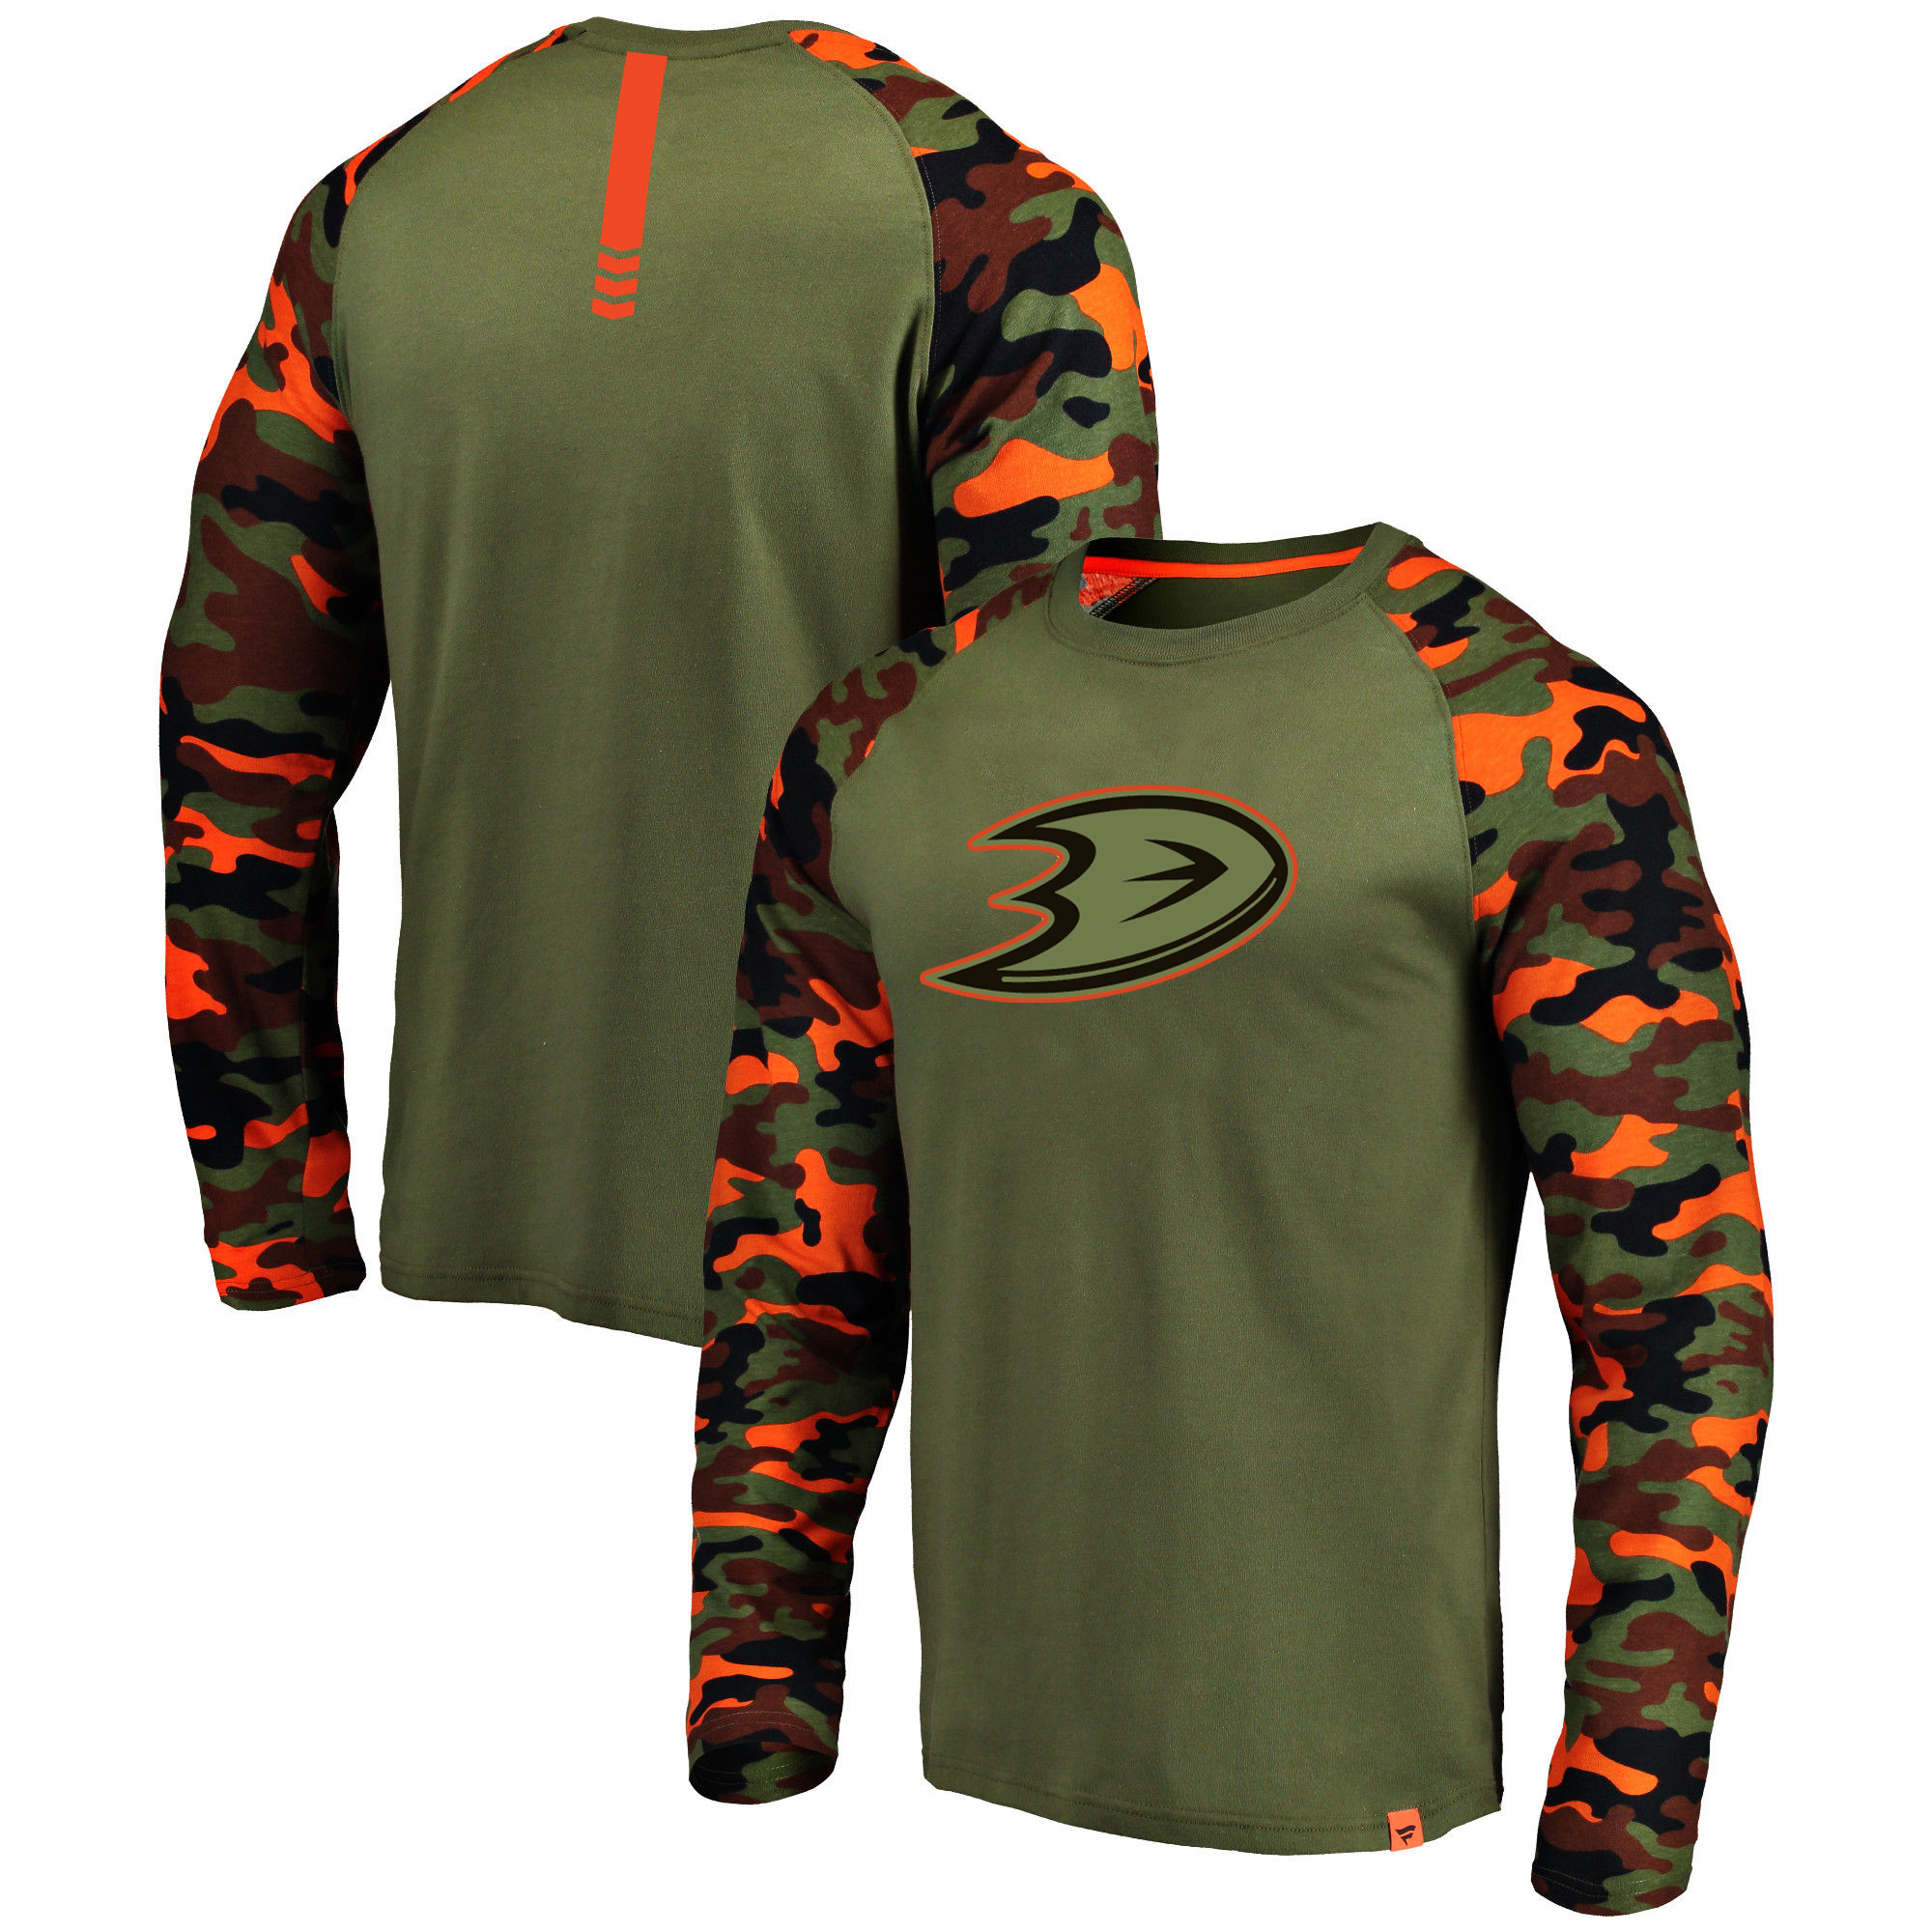 Anaheim Ducks Fanatics Branded Olive/Camo Recon Long Sleeve Raglan T-Shirt